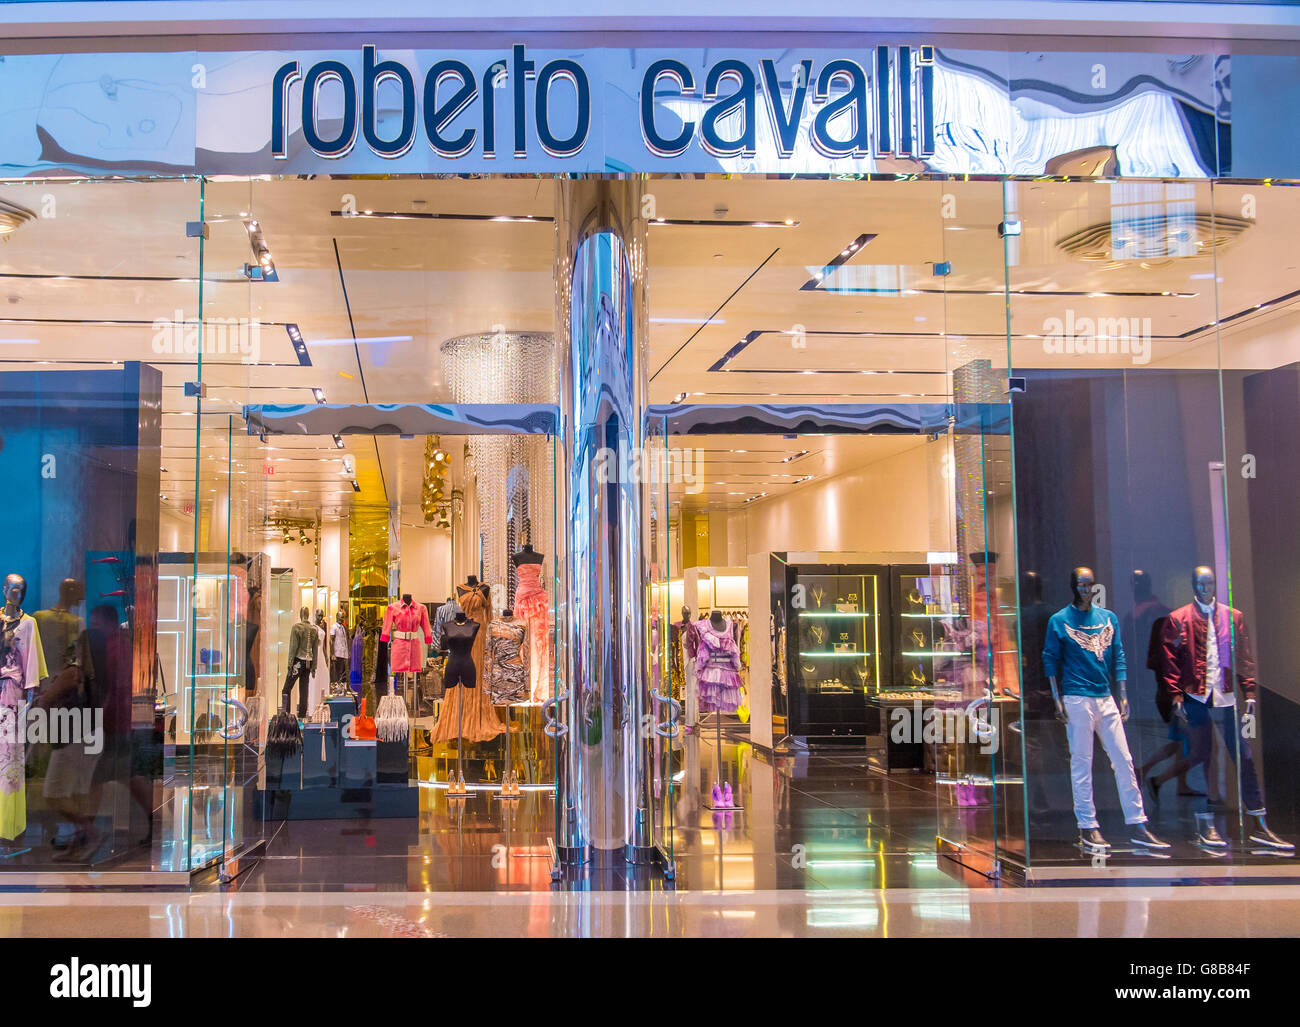 Exterior of a Roberto Cavalli store in Las Vegas strip Stock Photo - Alamy